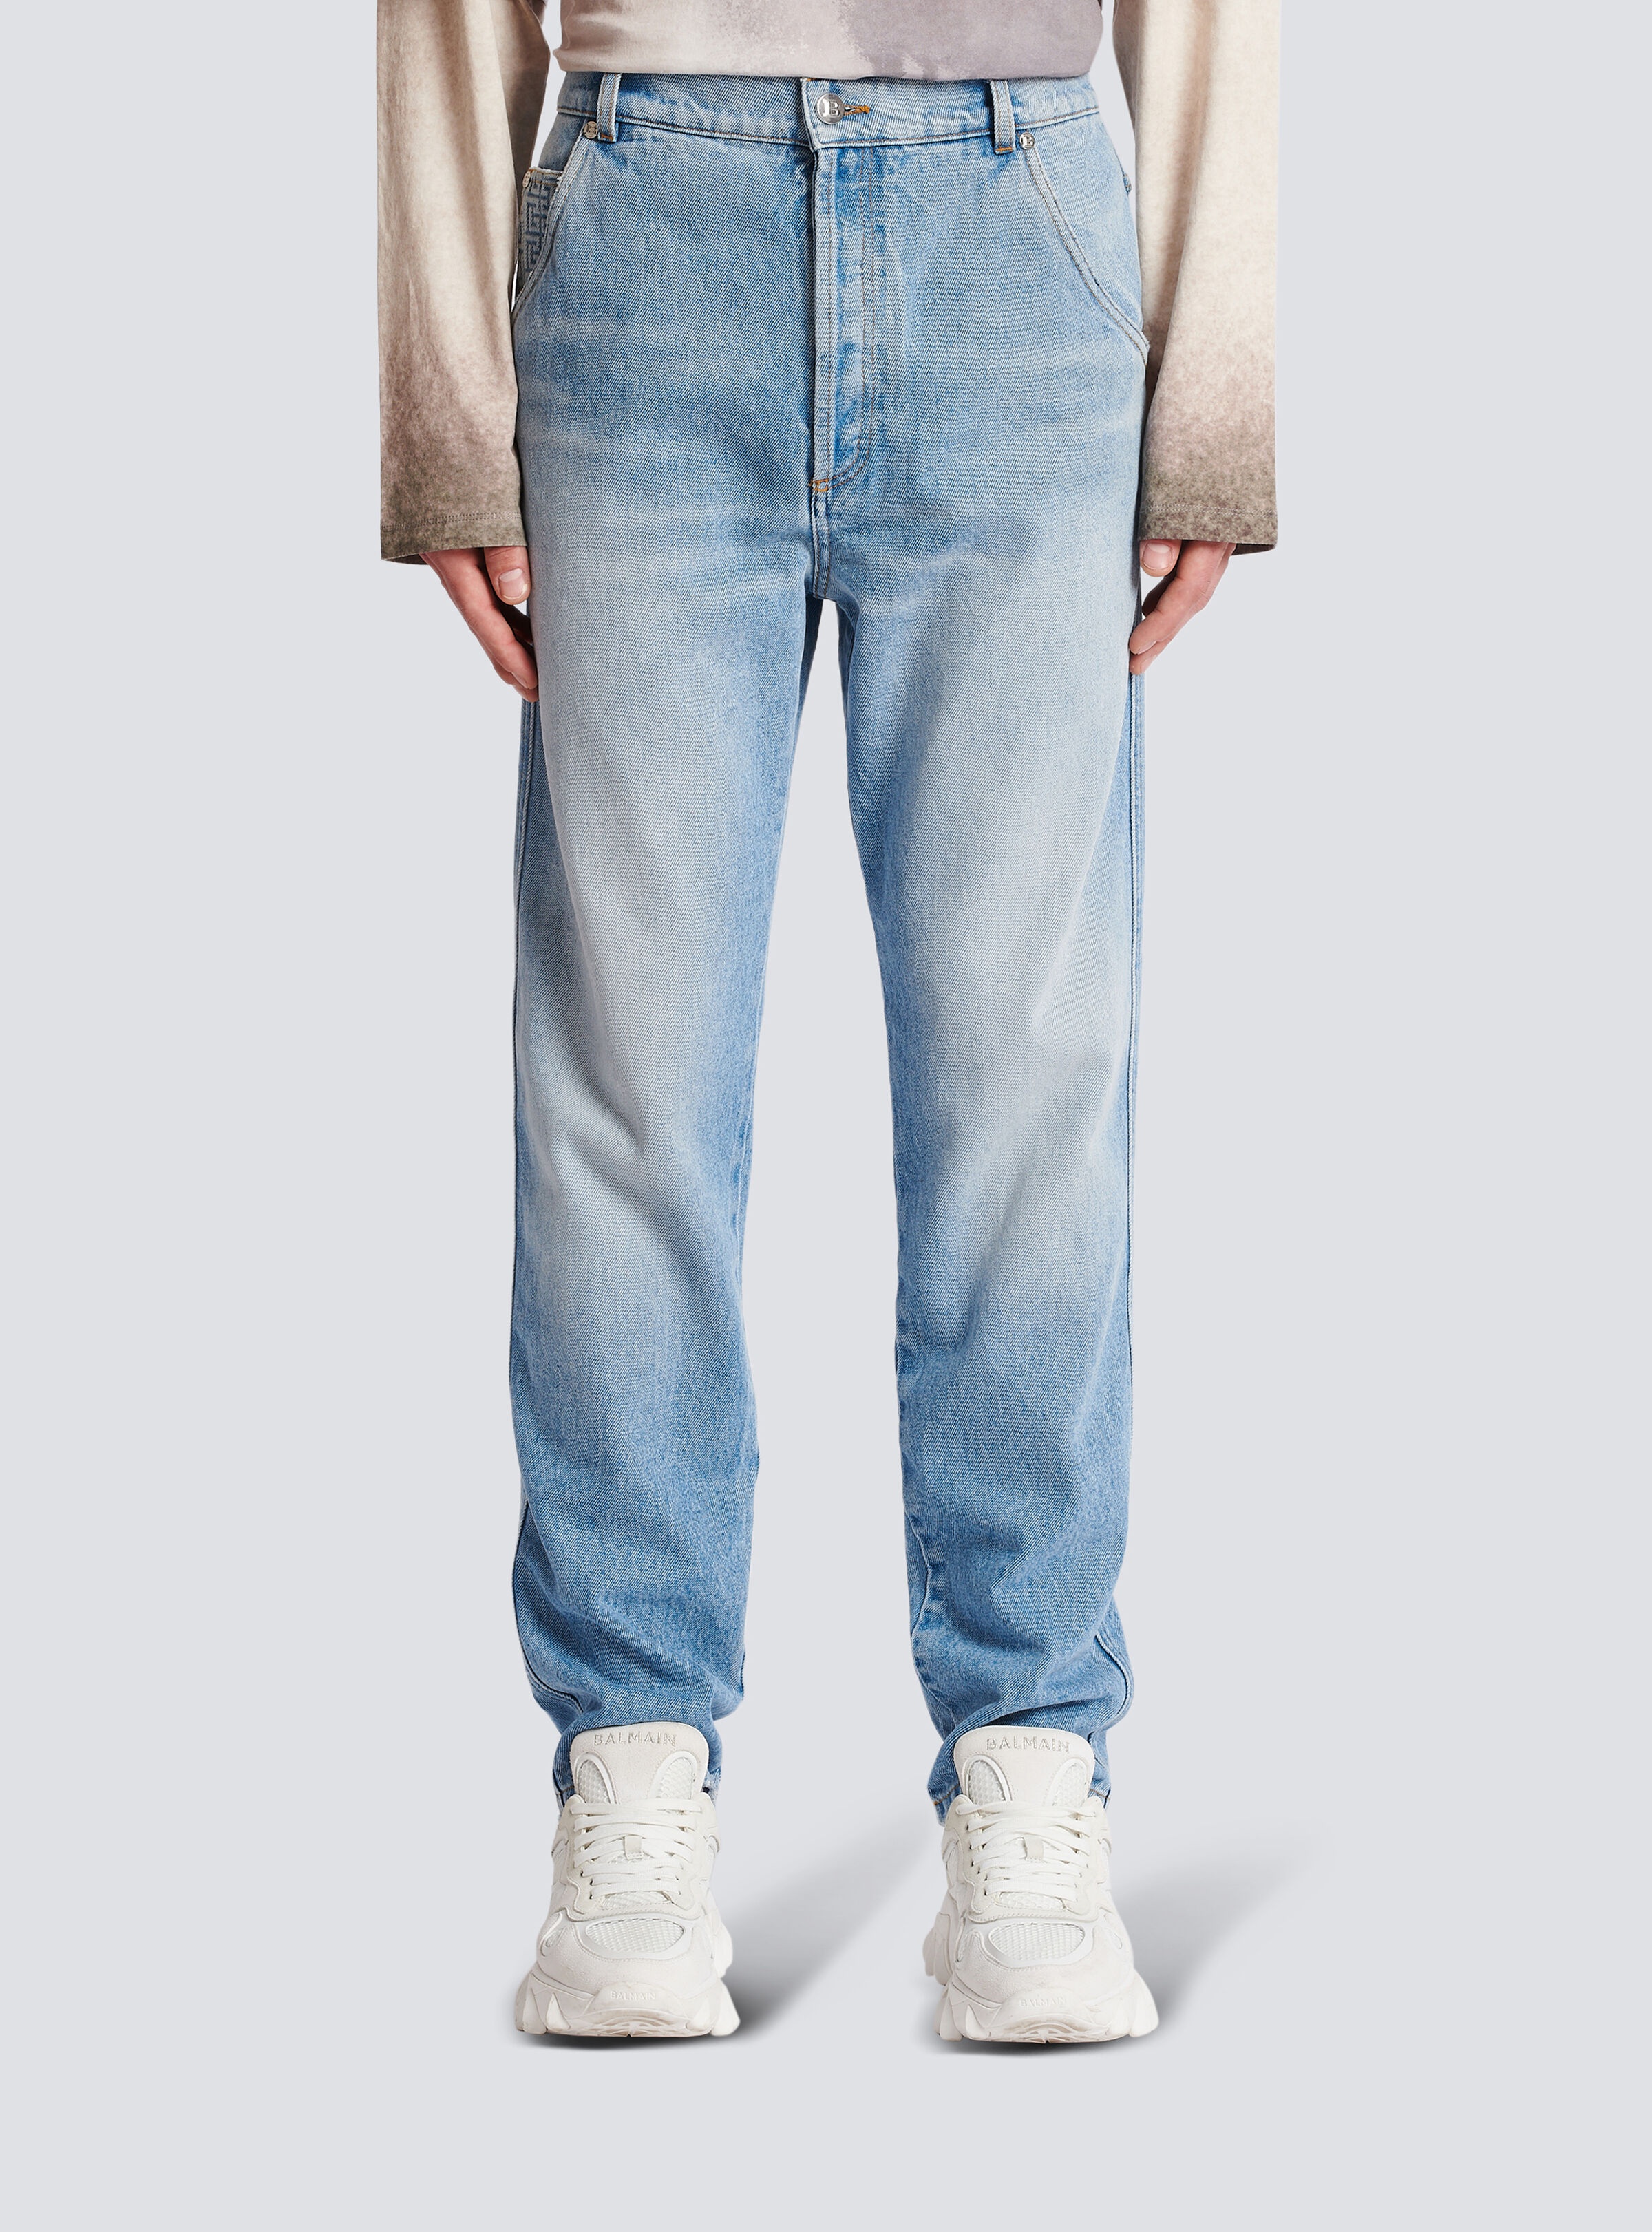 Straight cut cotton jeans - 5